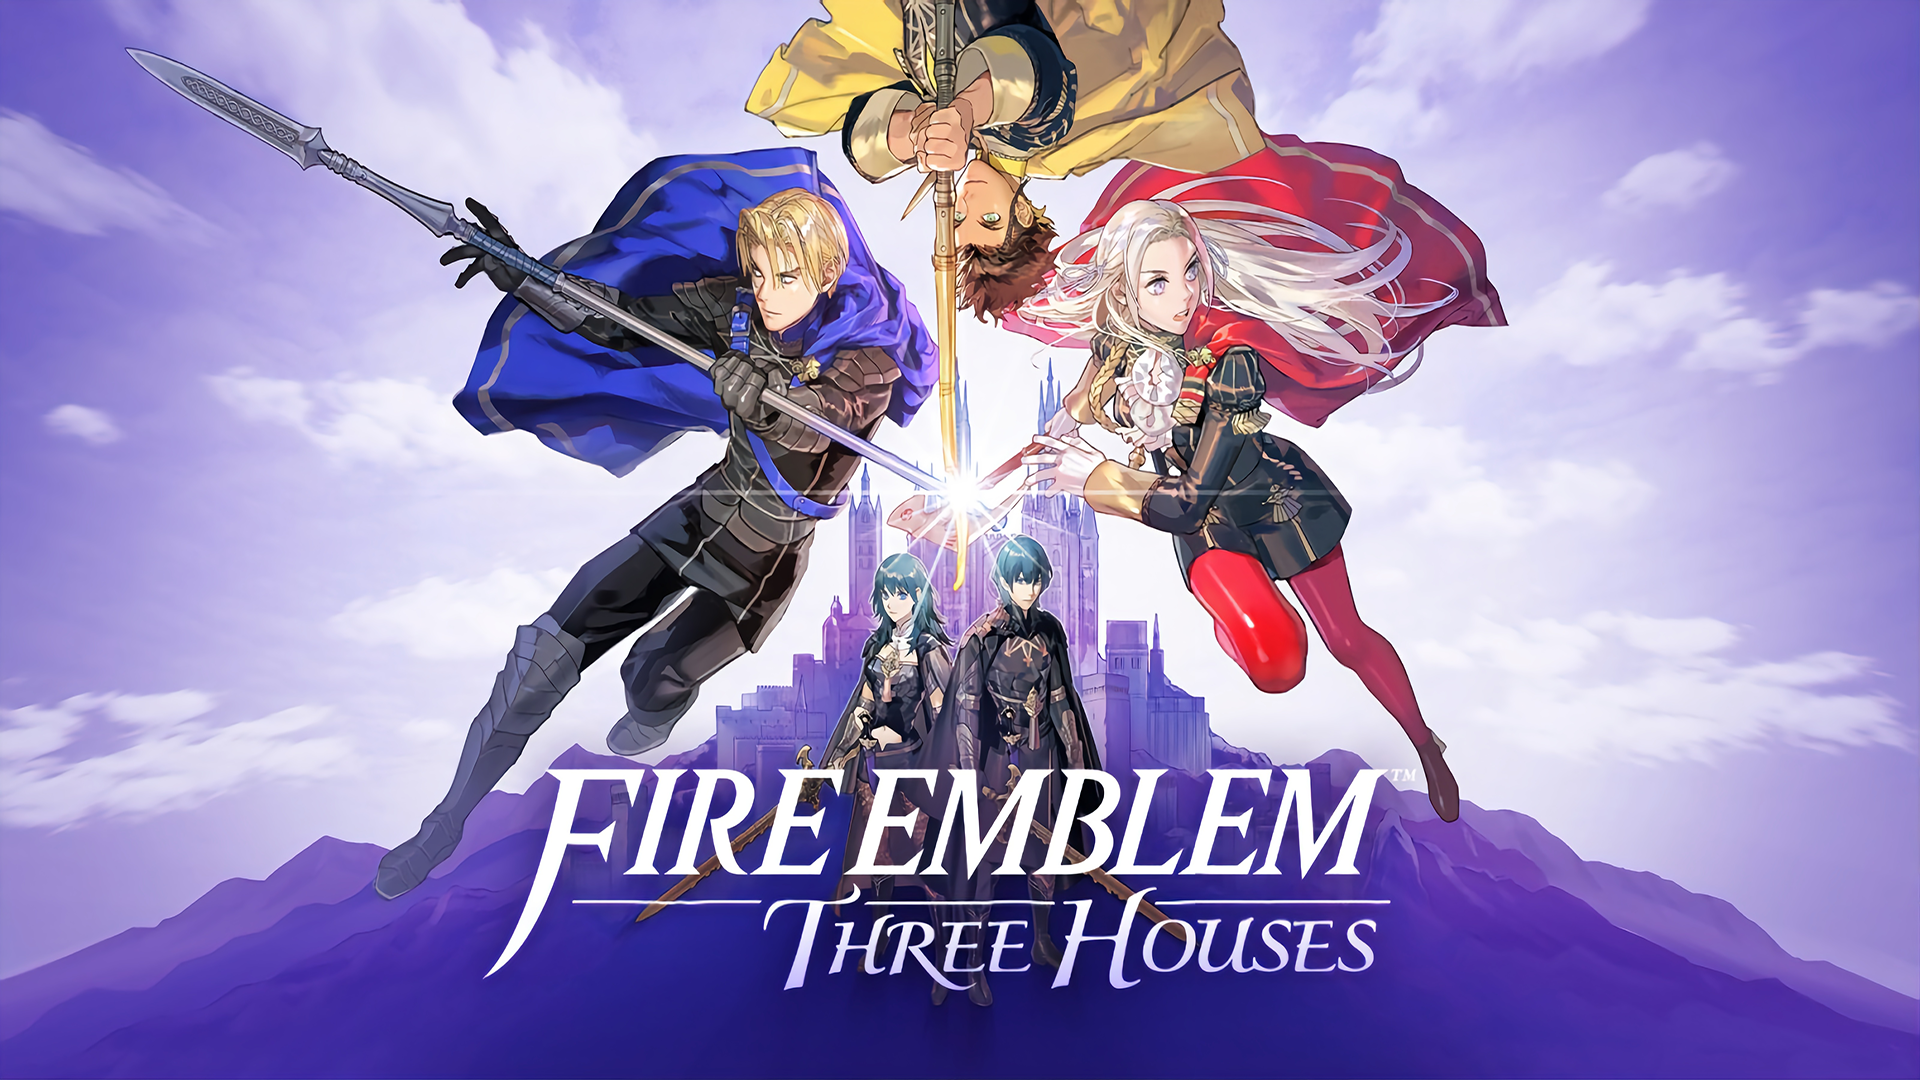 fire emblem wallpaper,action adventure game,cg artwork,games,anime,movie